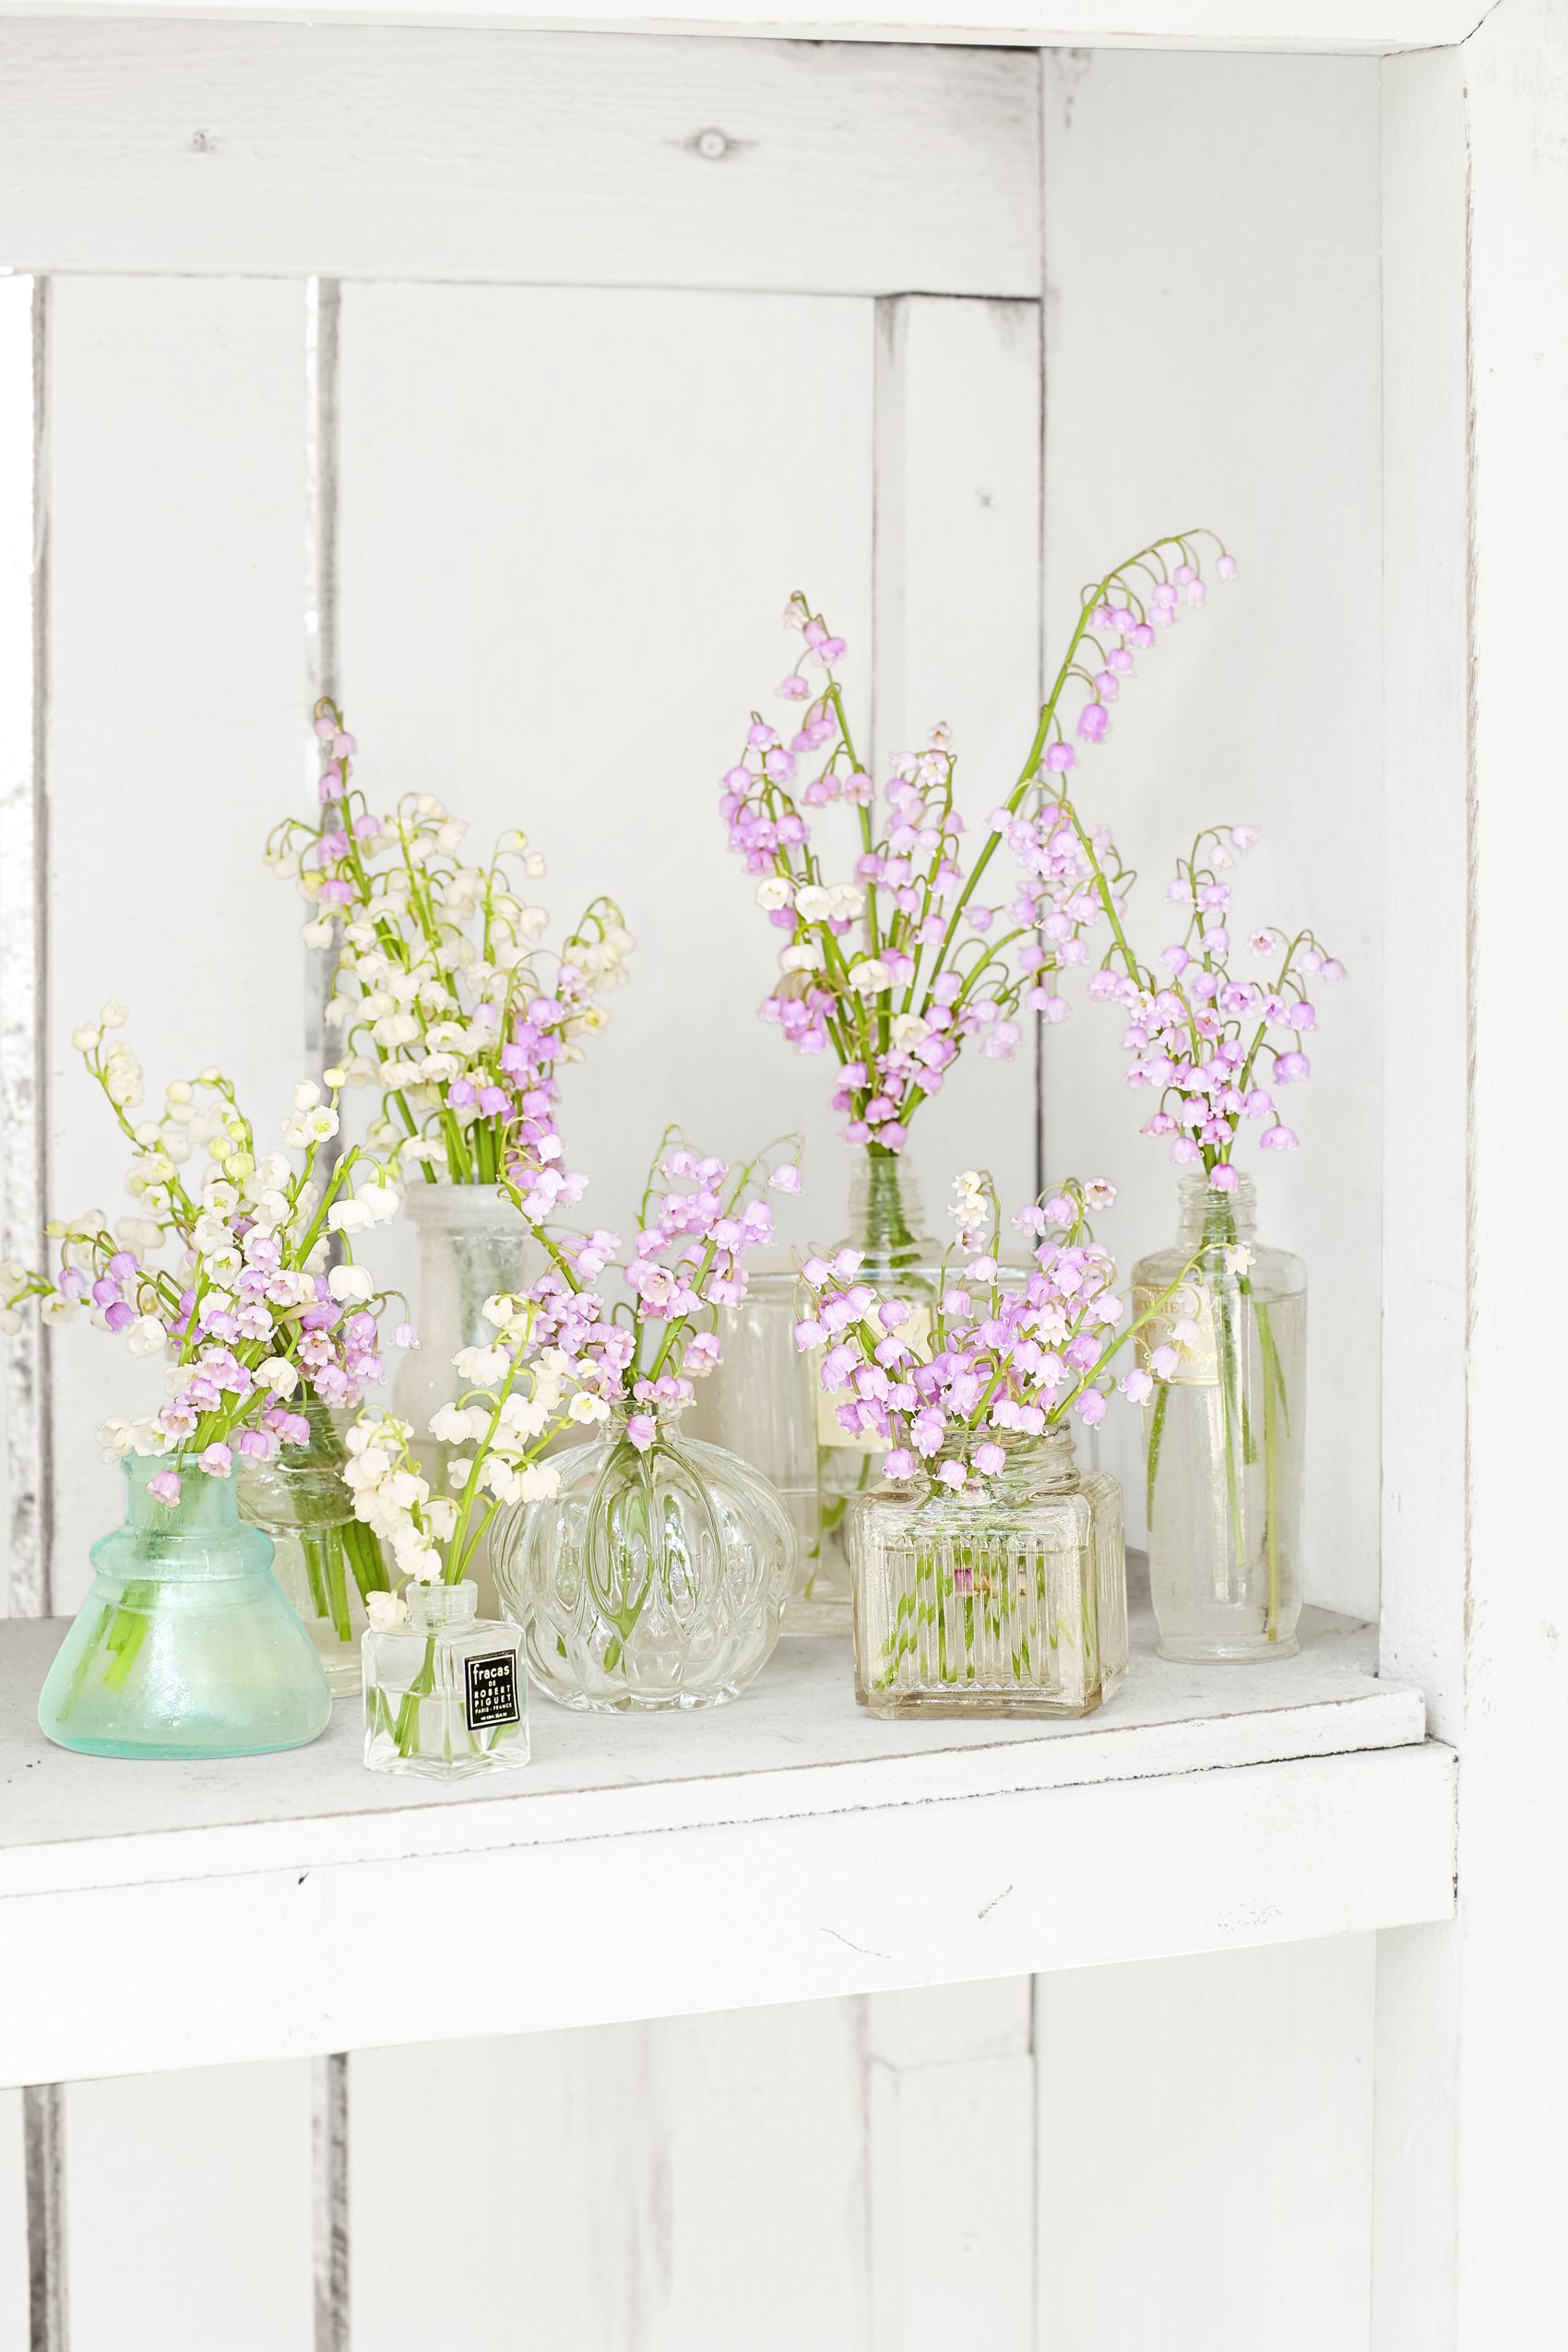 52 Easy Flower Arrangement Ideas Creative Diy Floral Displays